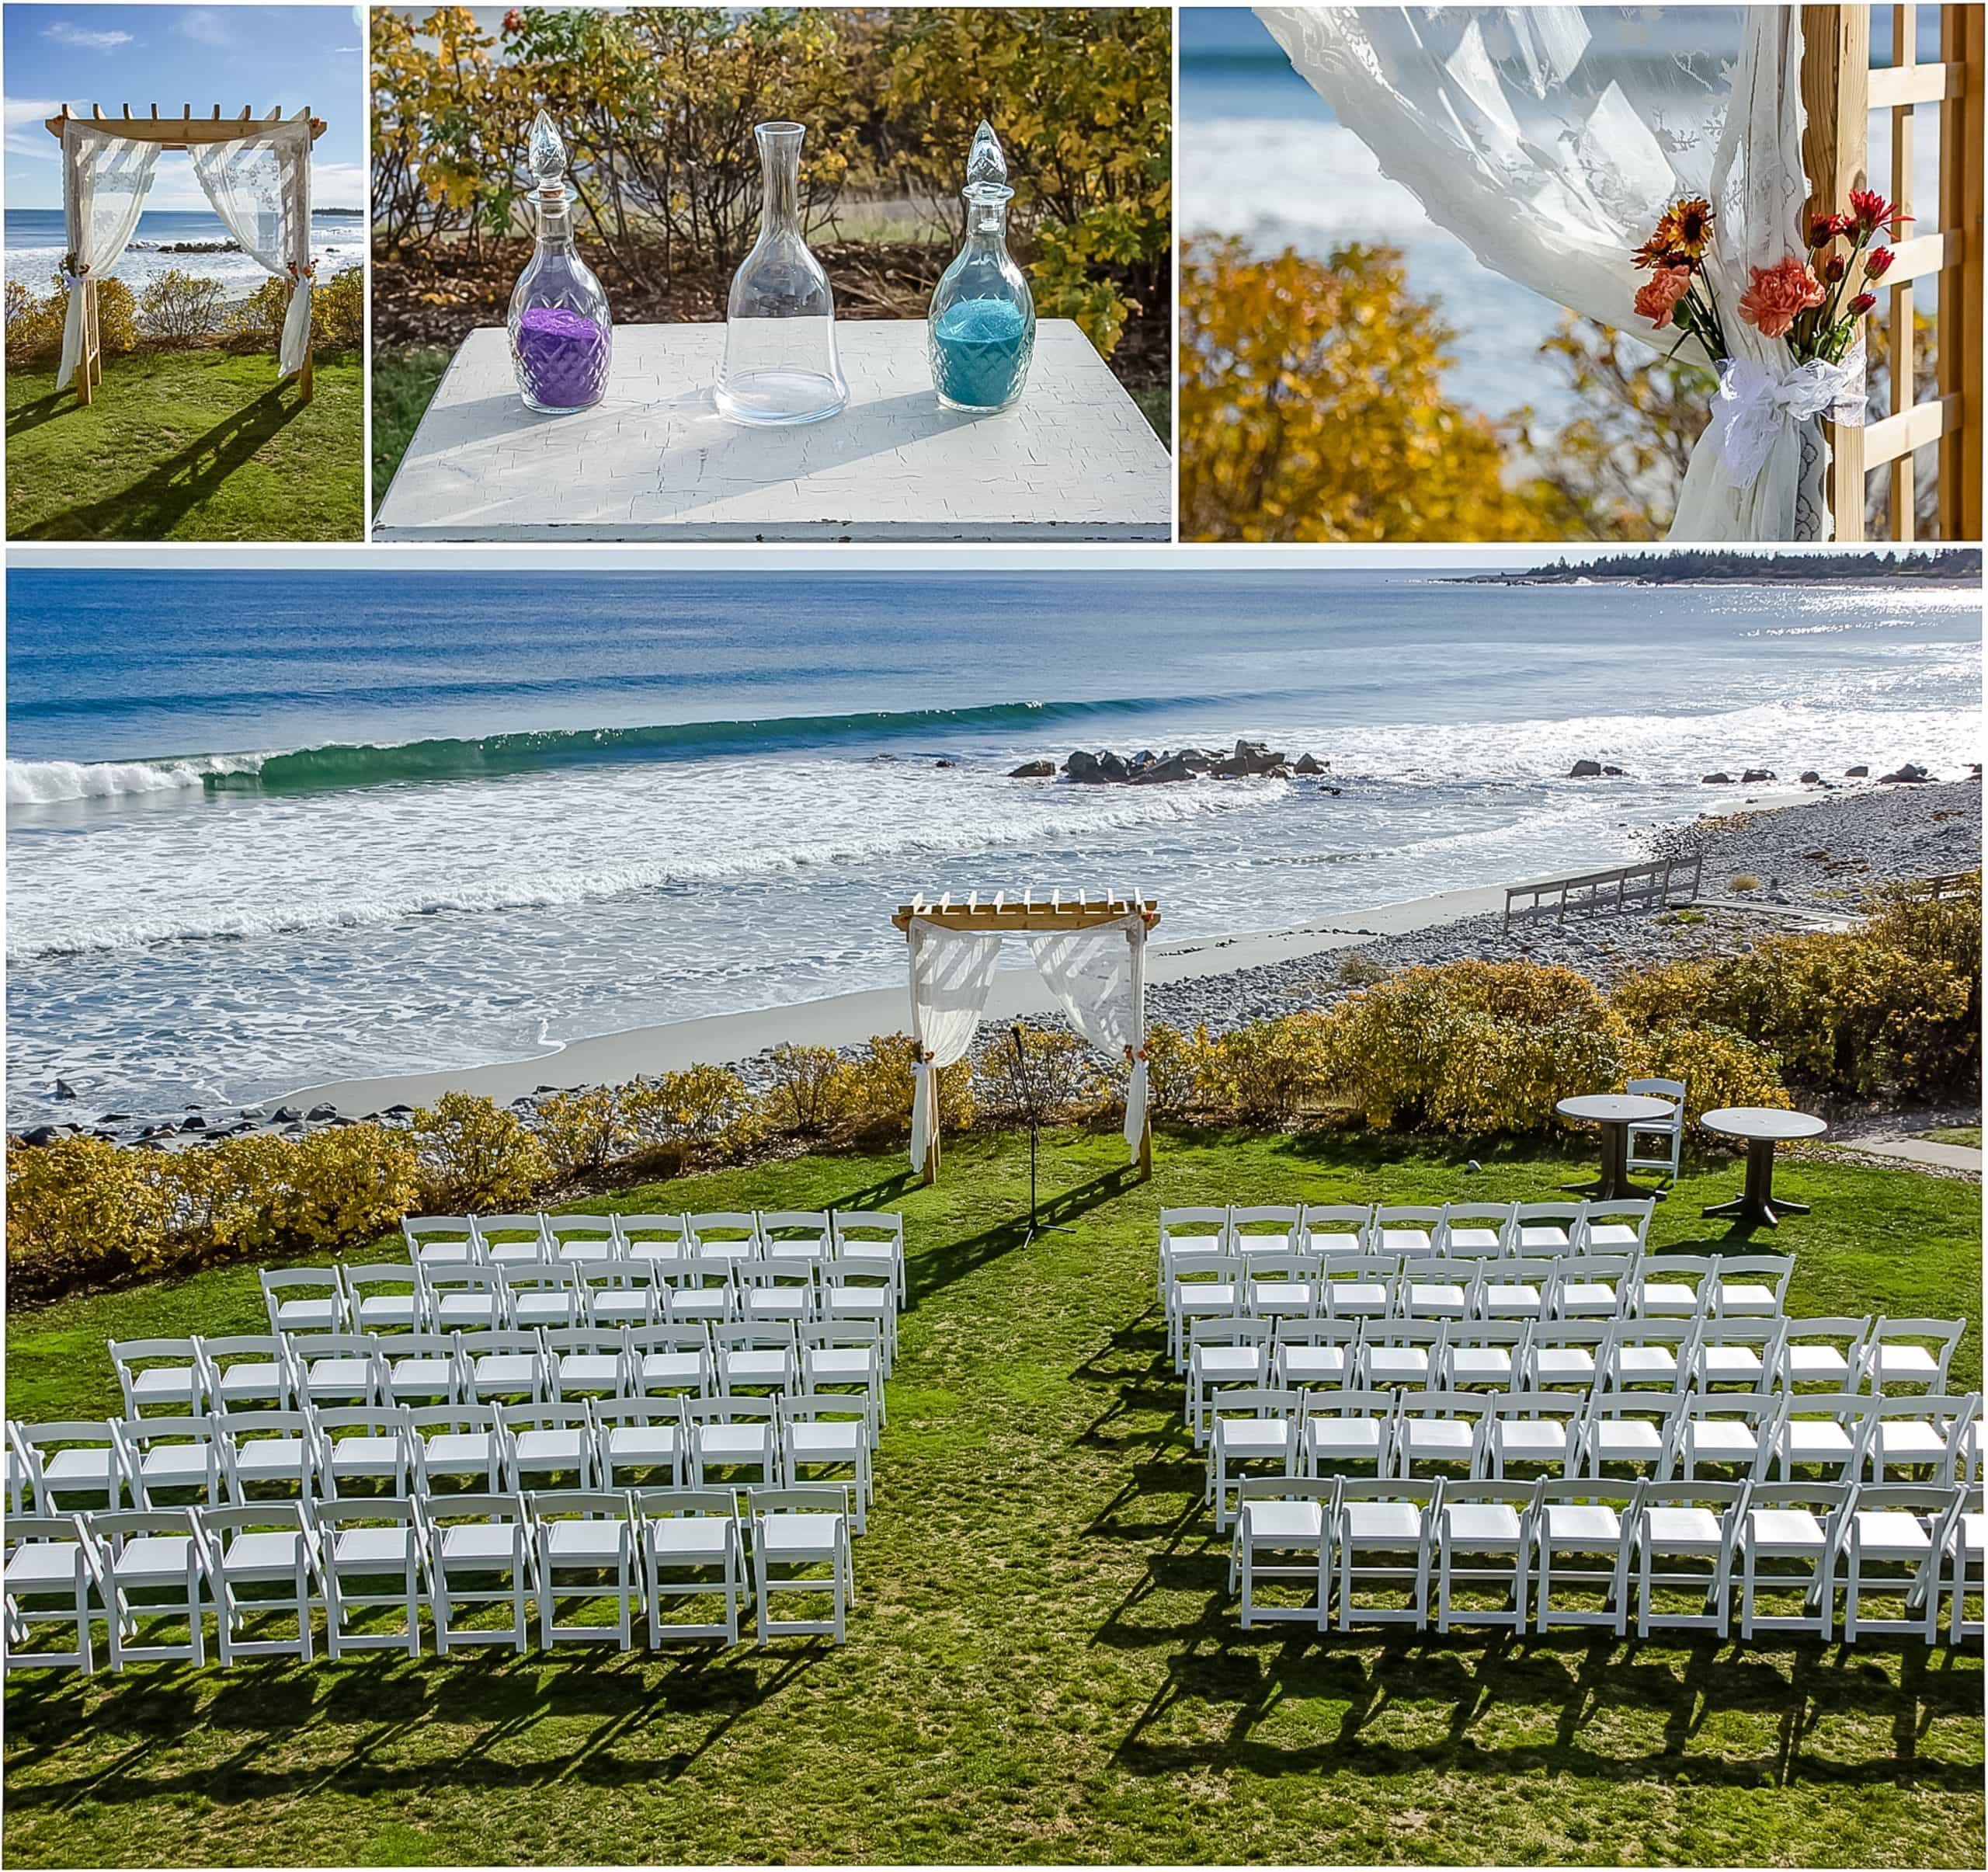 Oceanside White Point Beach Wedding Ceremony Setup.